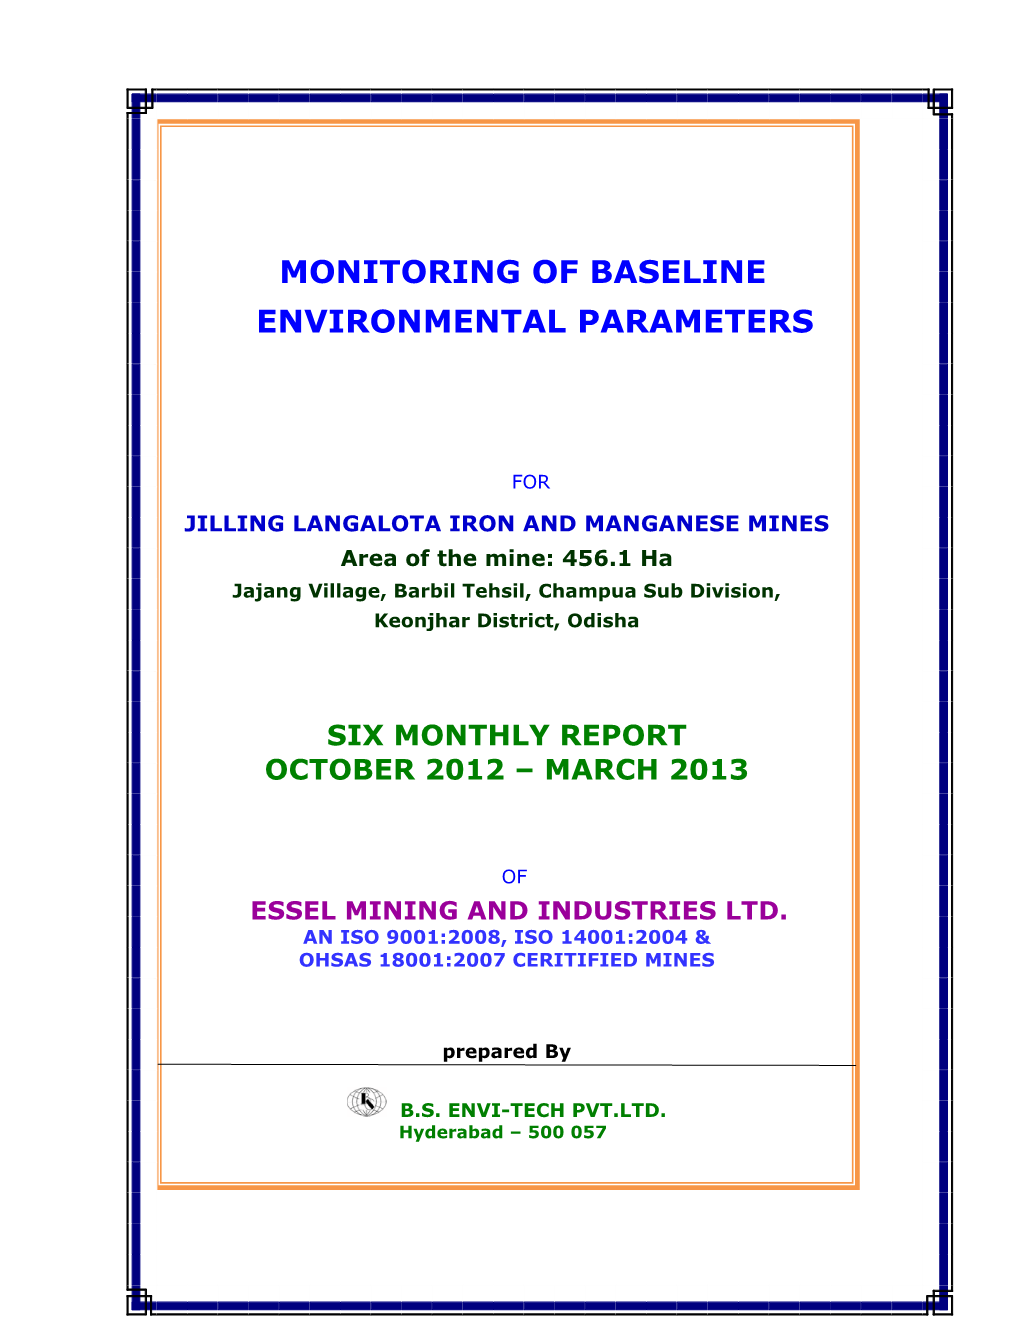 Monitoring of Baseline Environmental Parameters